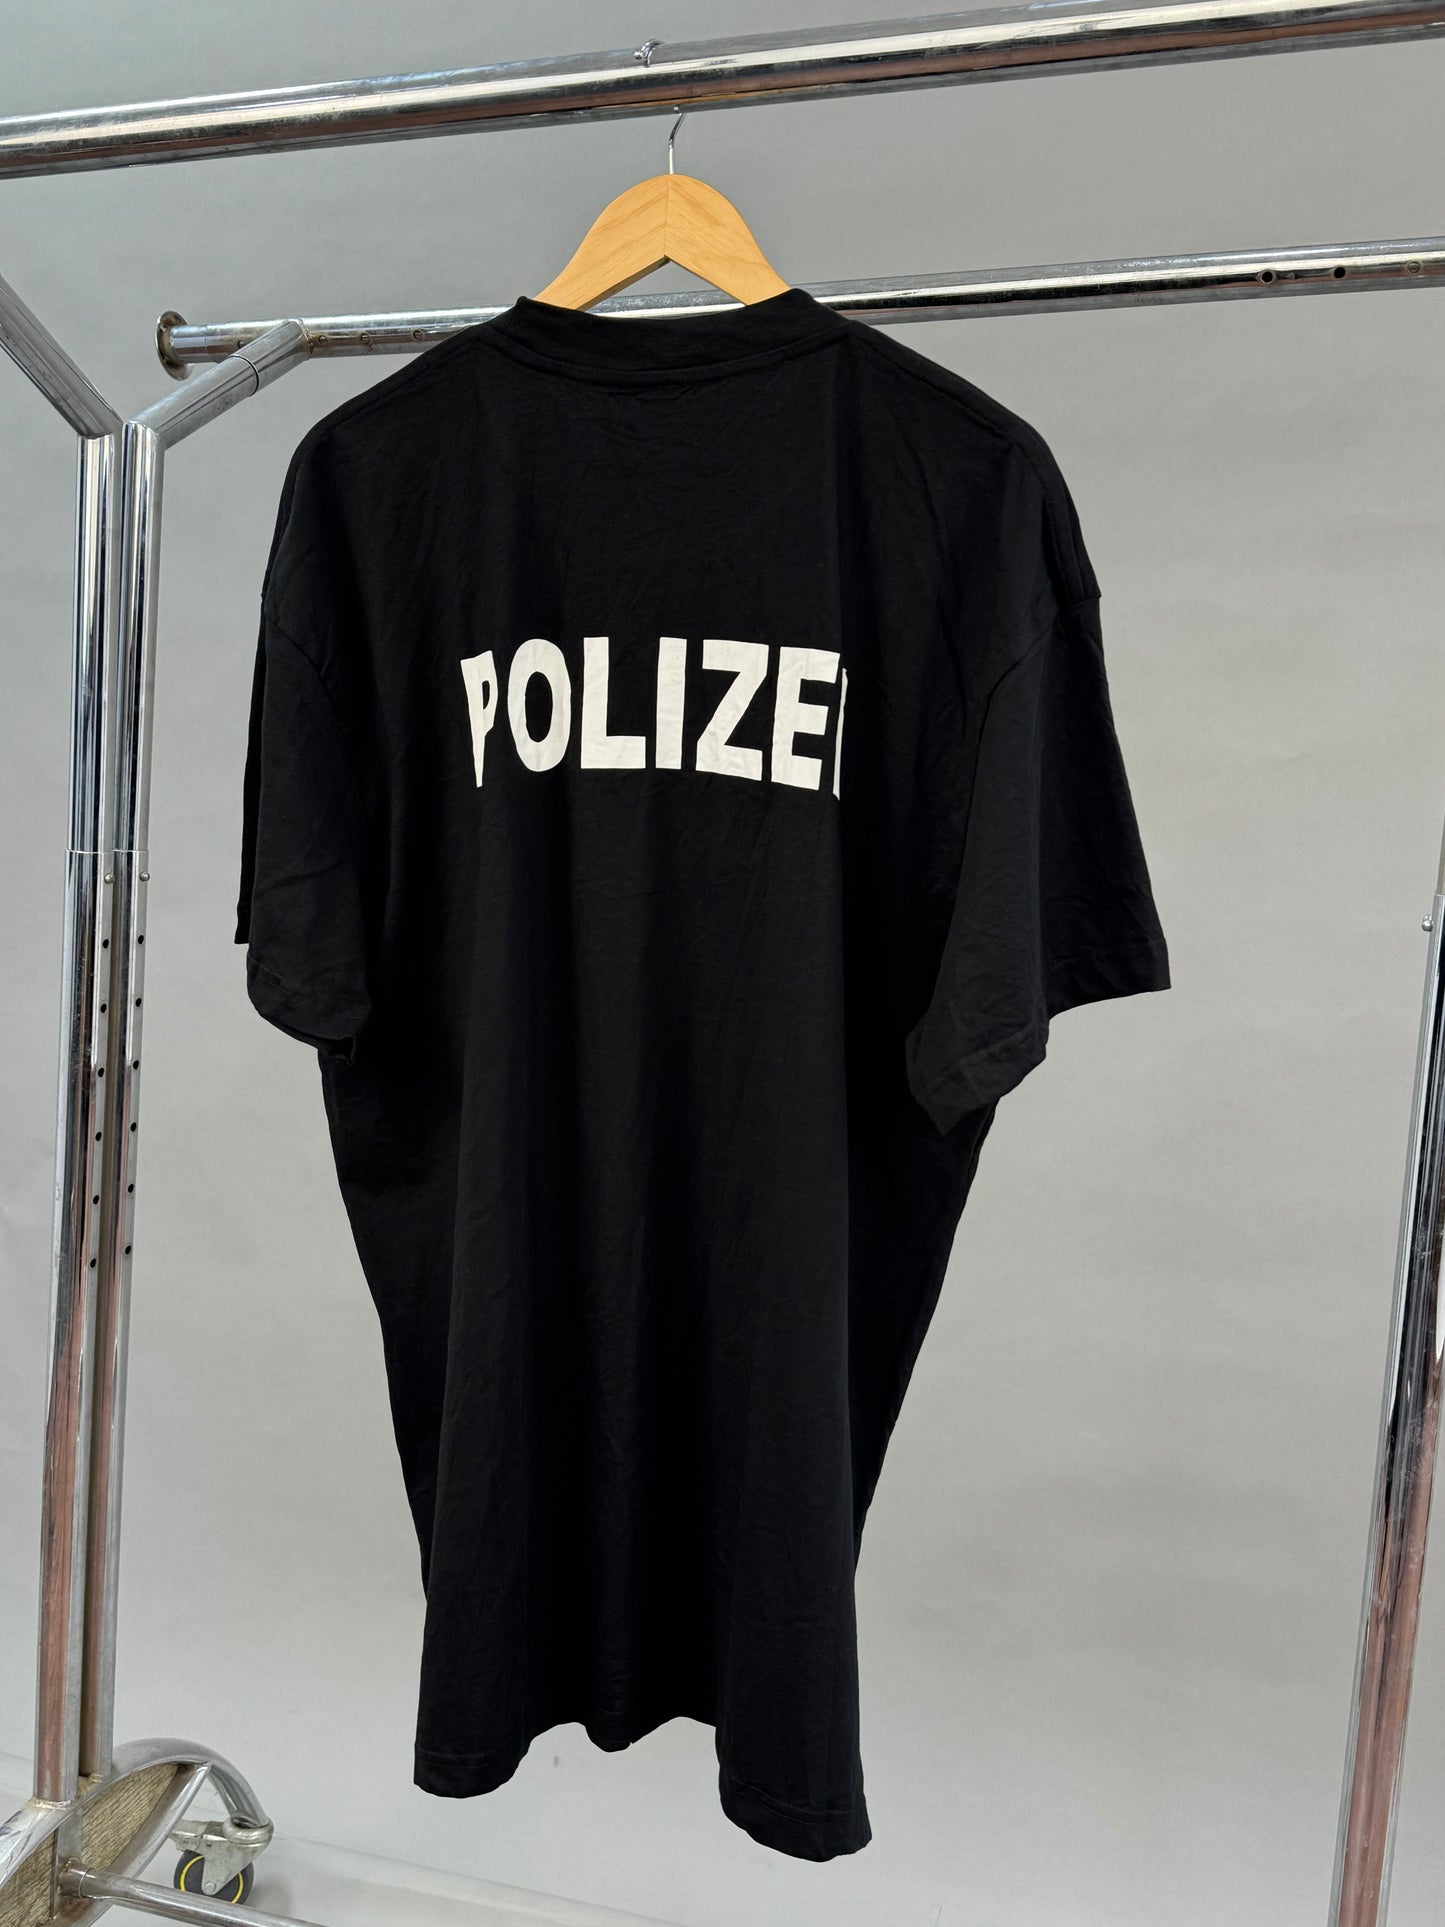 Polizei oversized tee